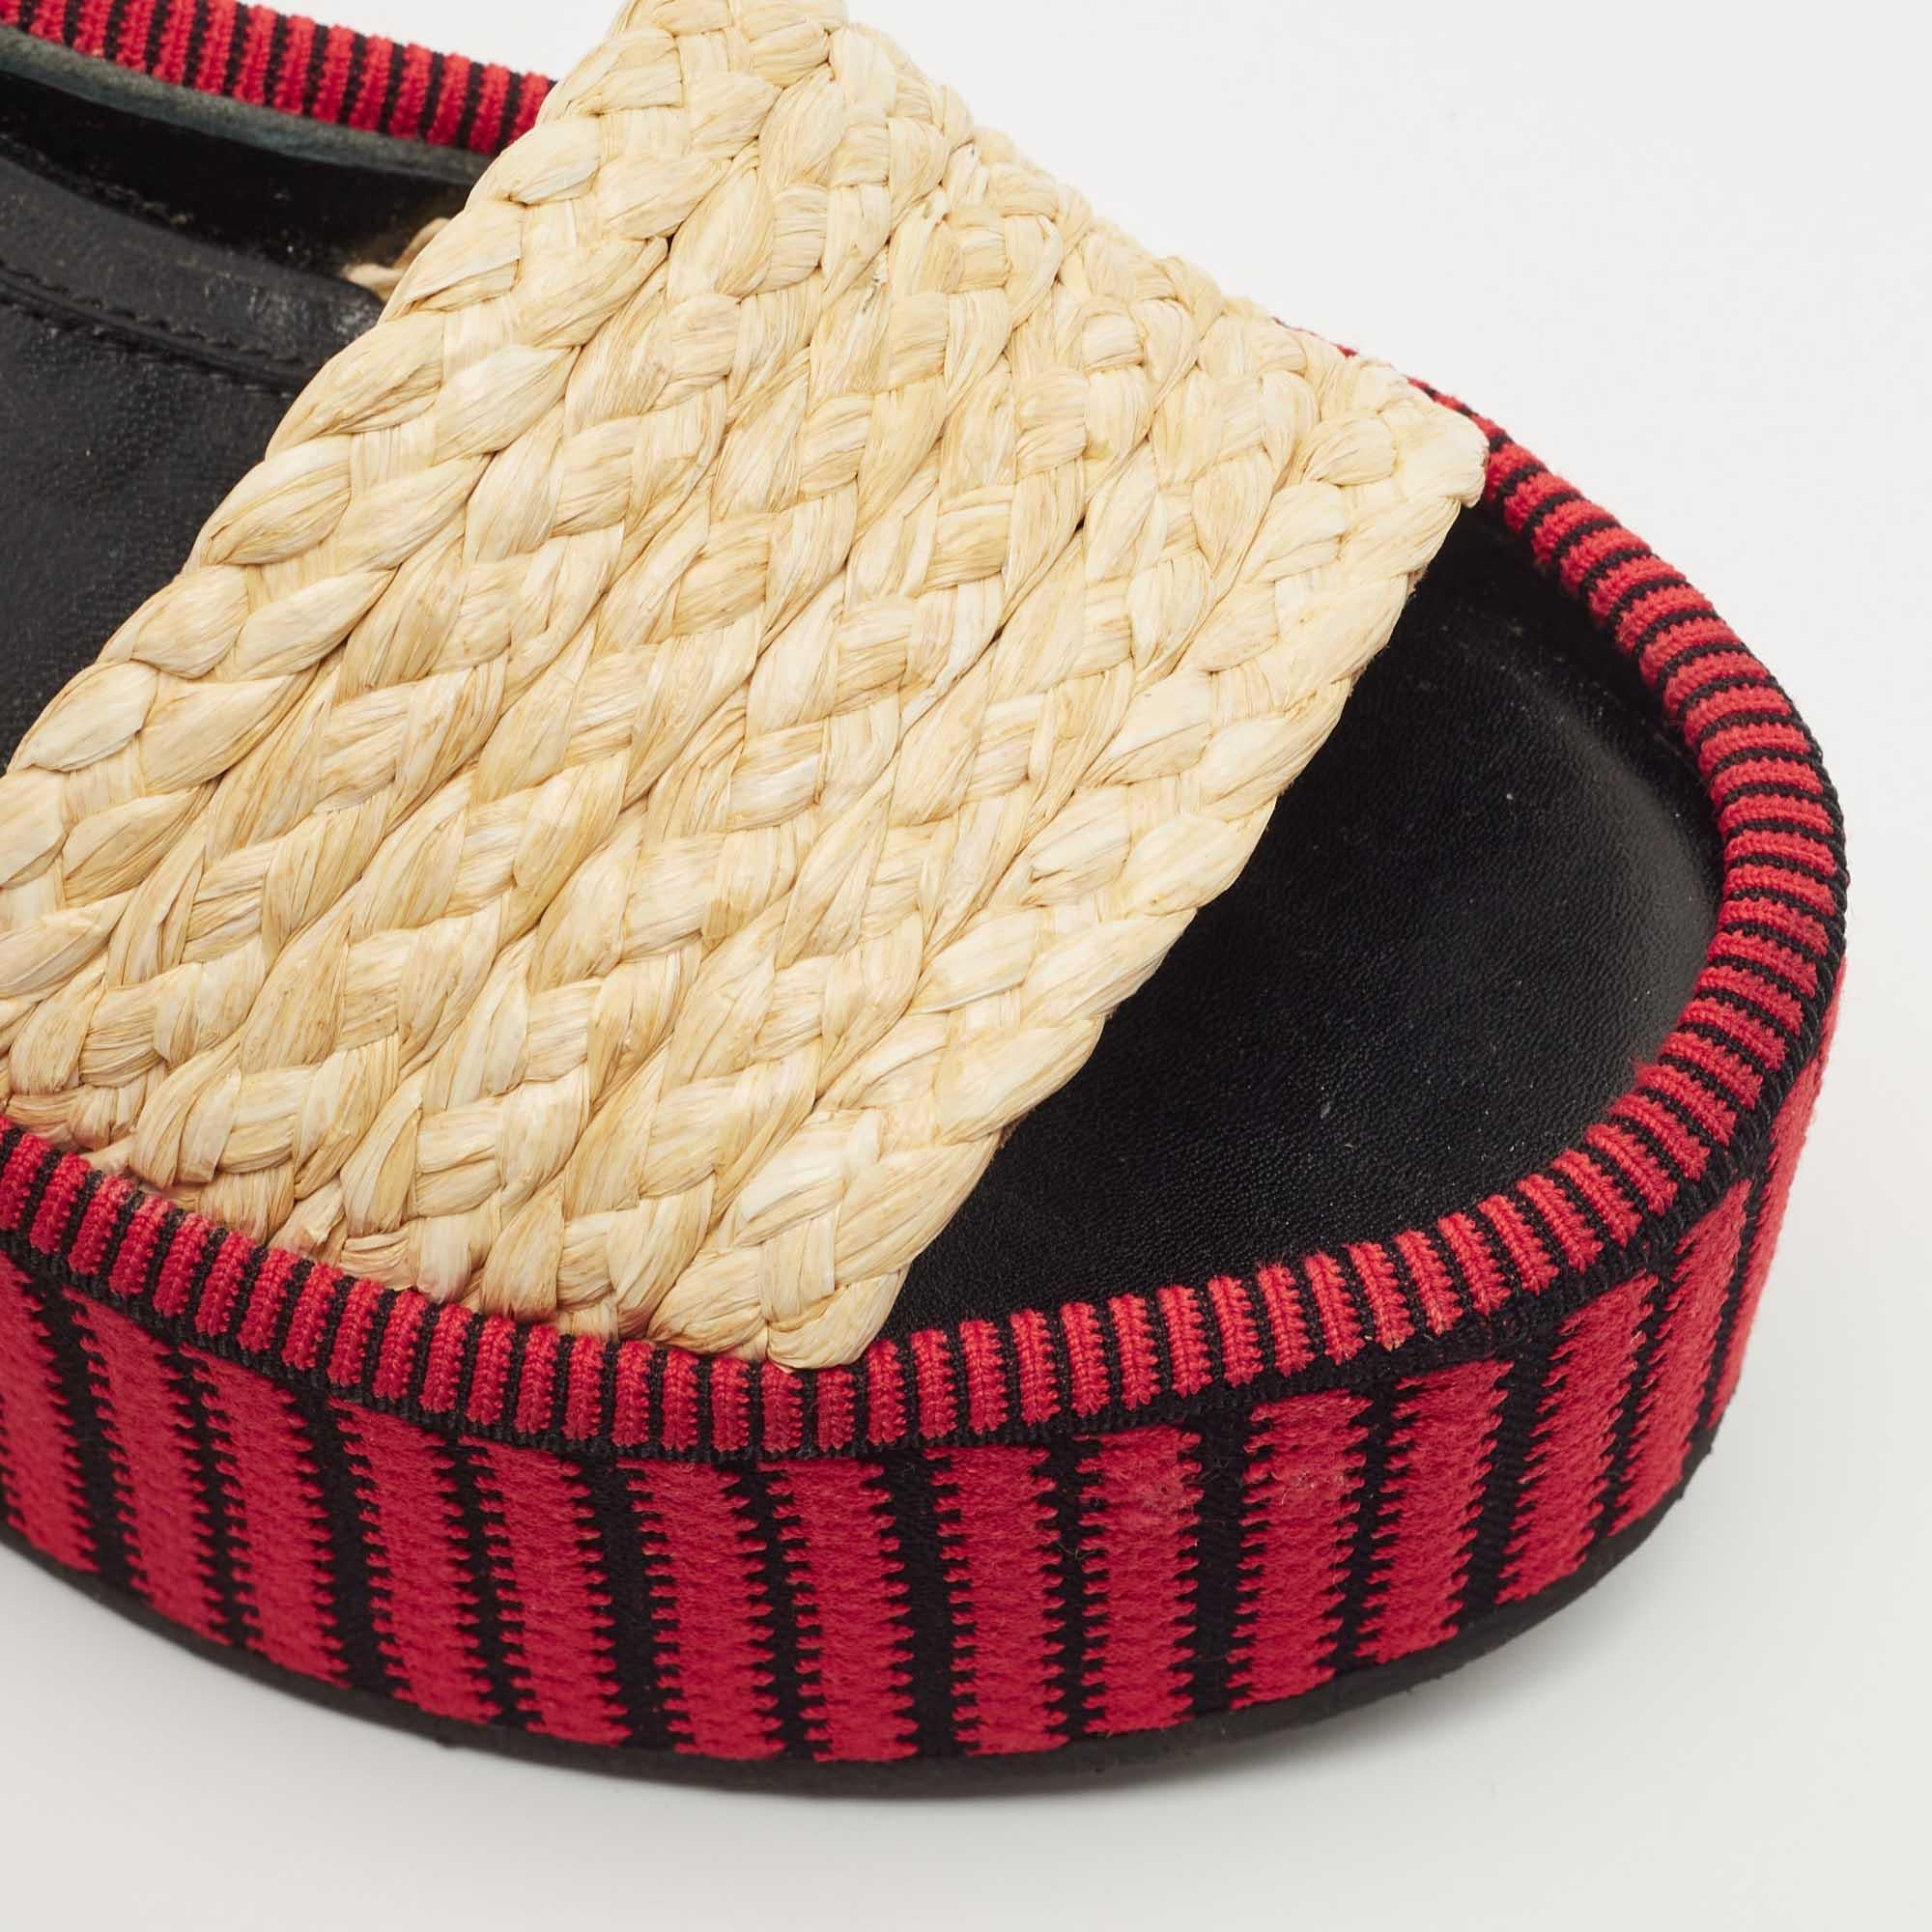 Celine Multicolor Patent and Raffia Wedge Striped Sandals Size 37.5 2